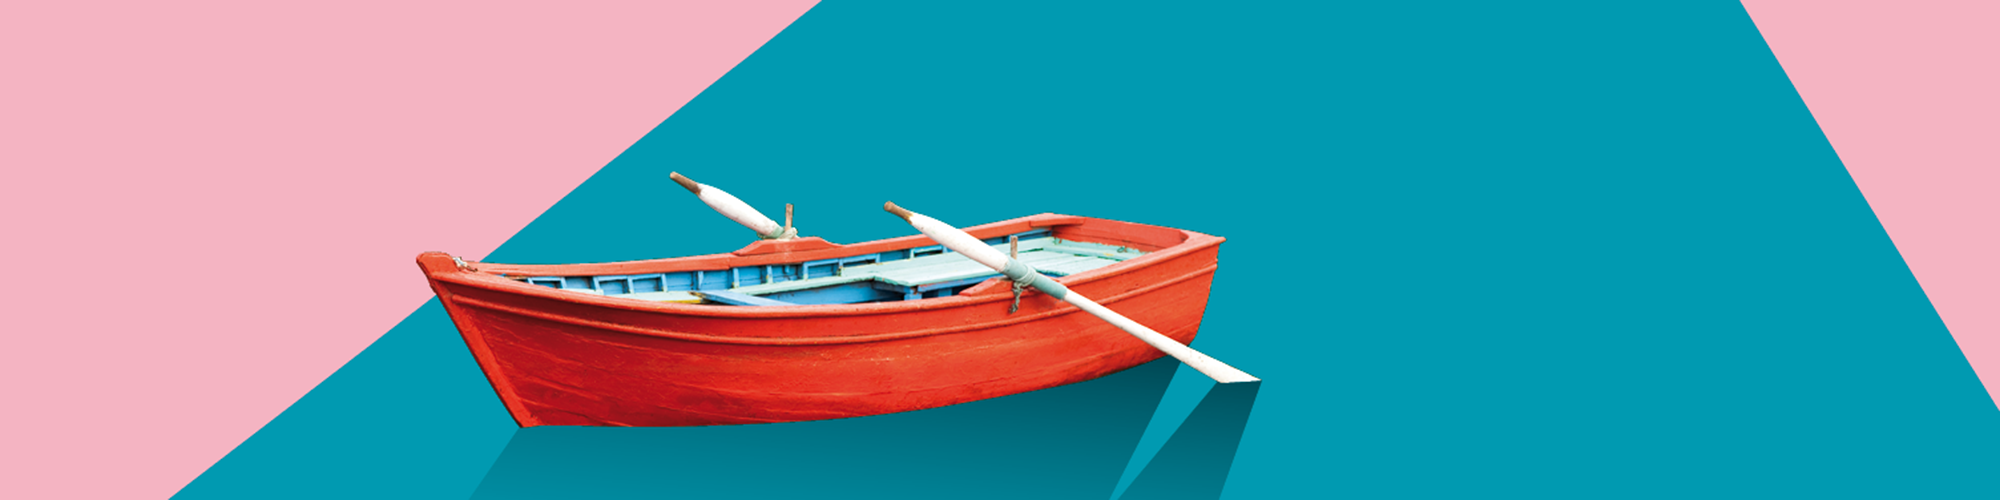 Rotes Ruderboot vor rosa-türkisfarbenem Hintergrund